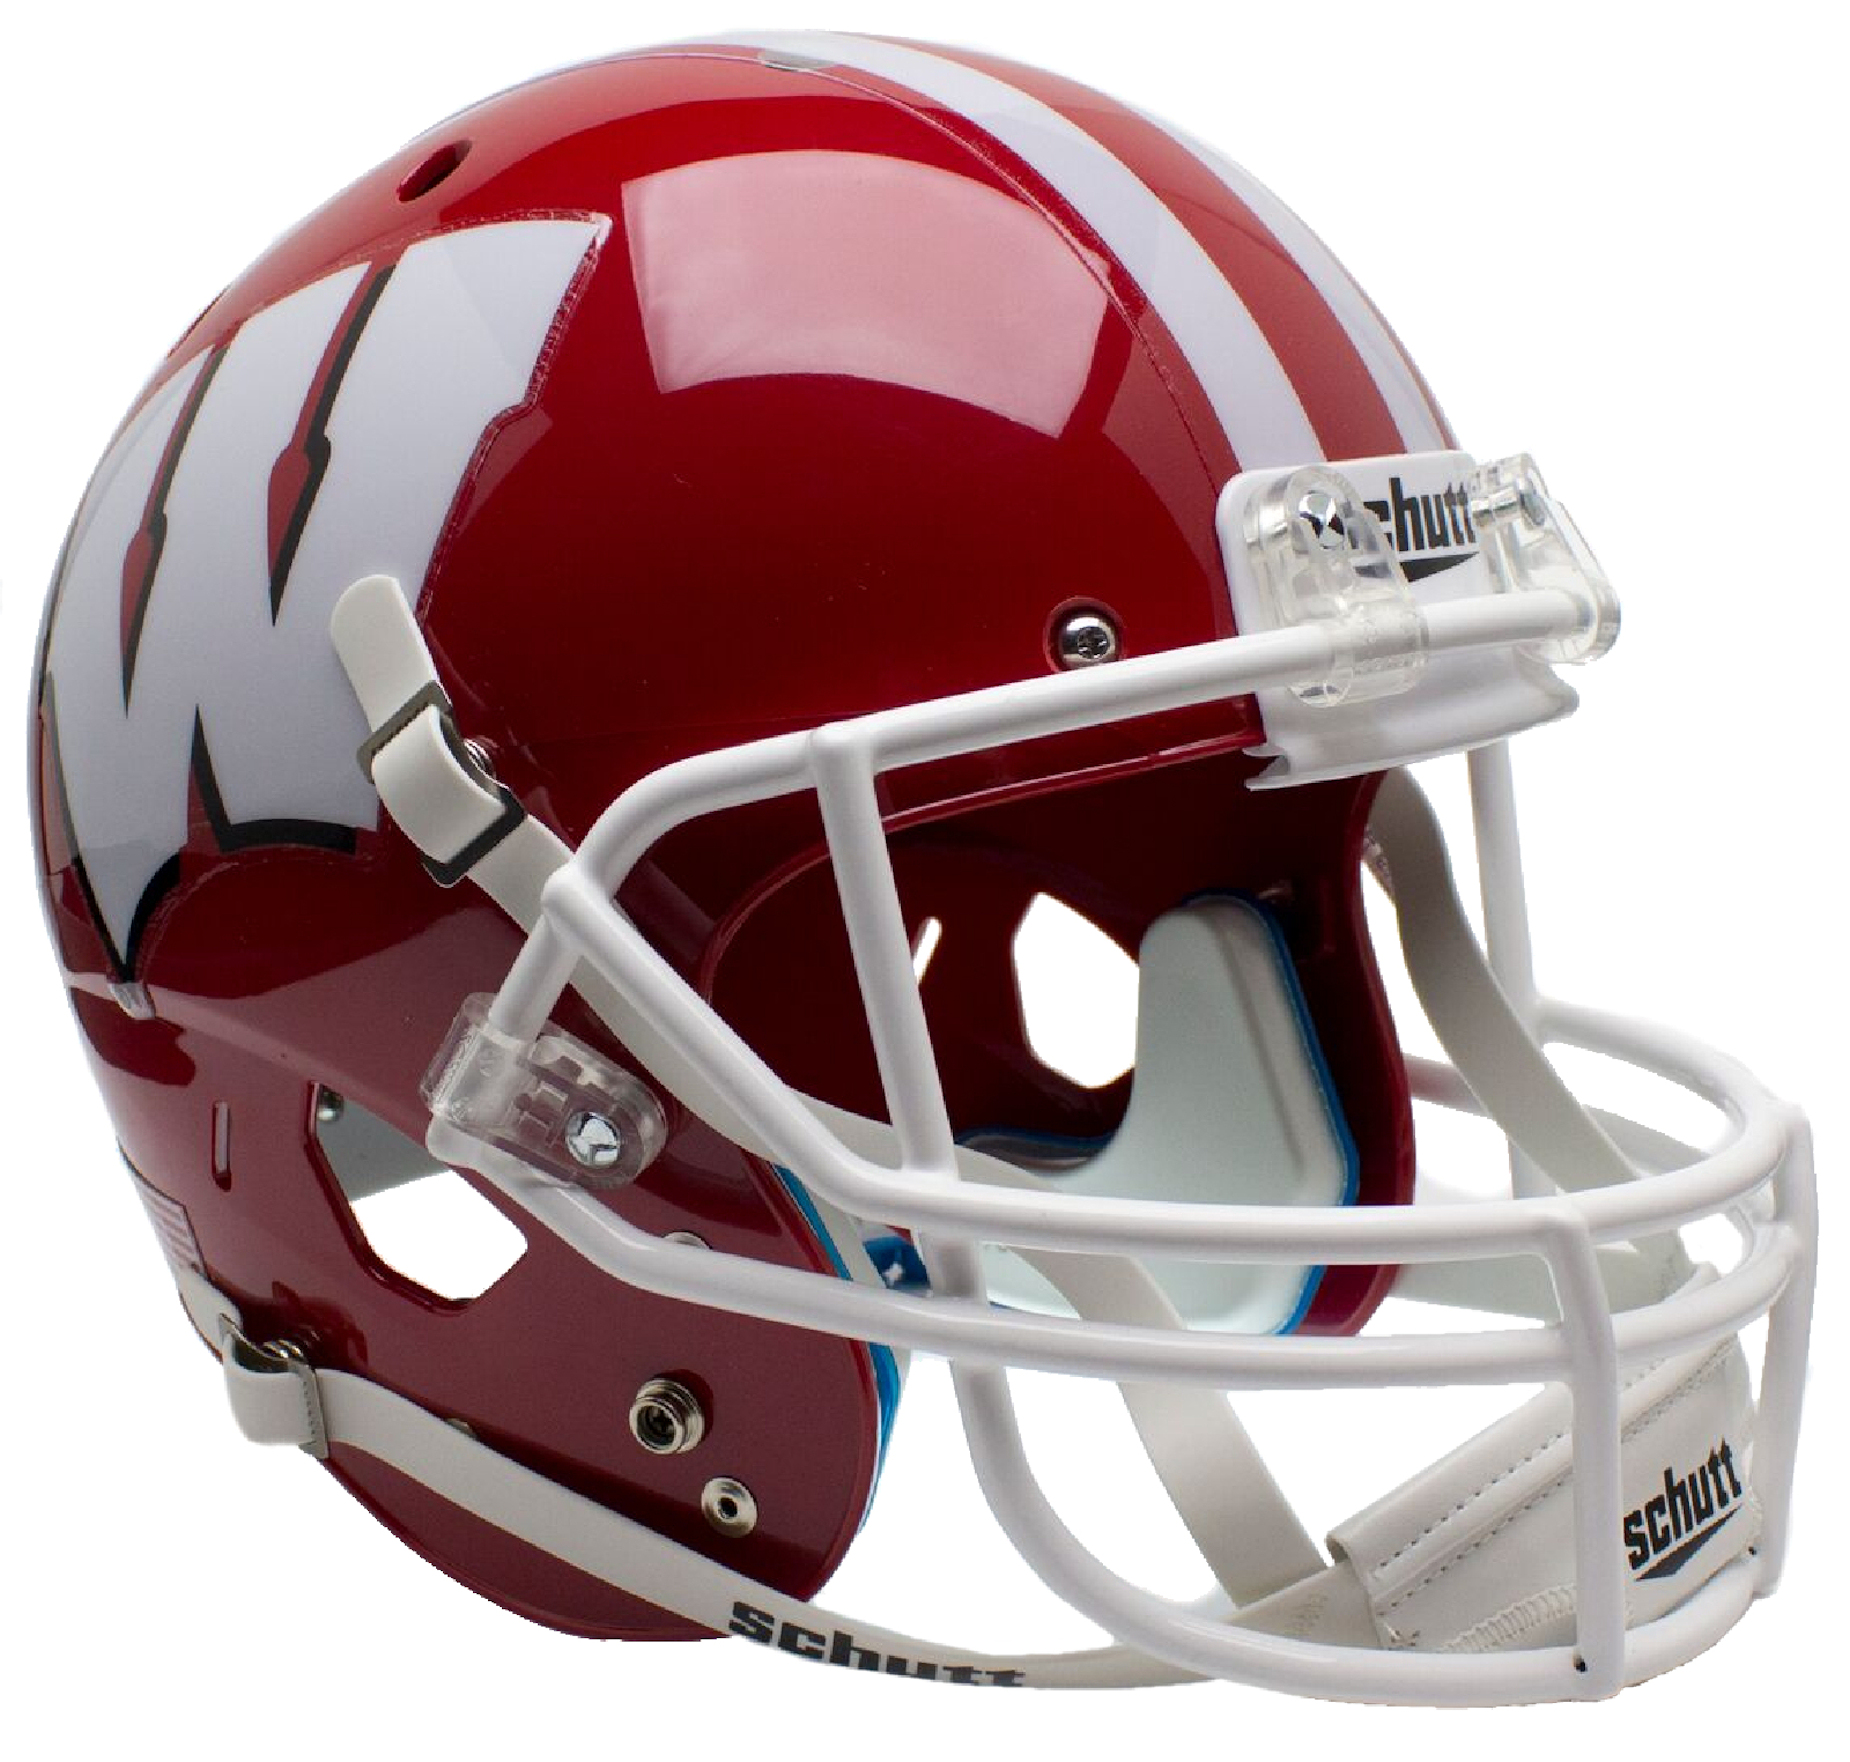 Wisconsin Badgers Full XP Replica Football Helmet Schutt <B>Scarlet</B>